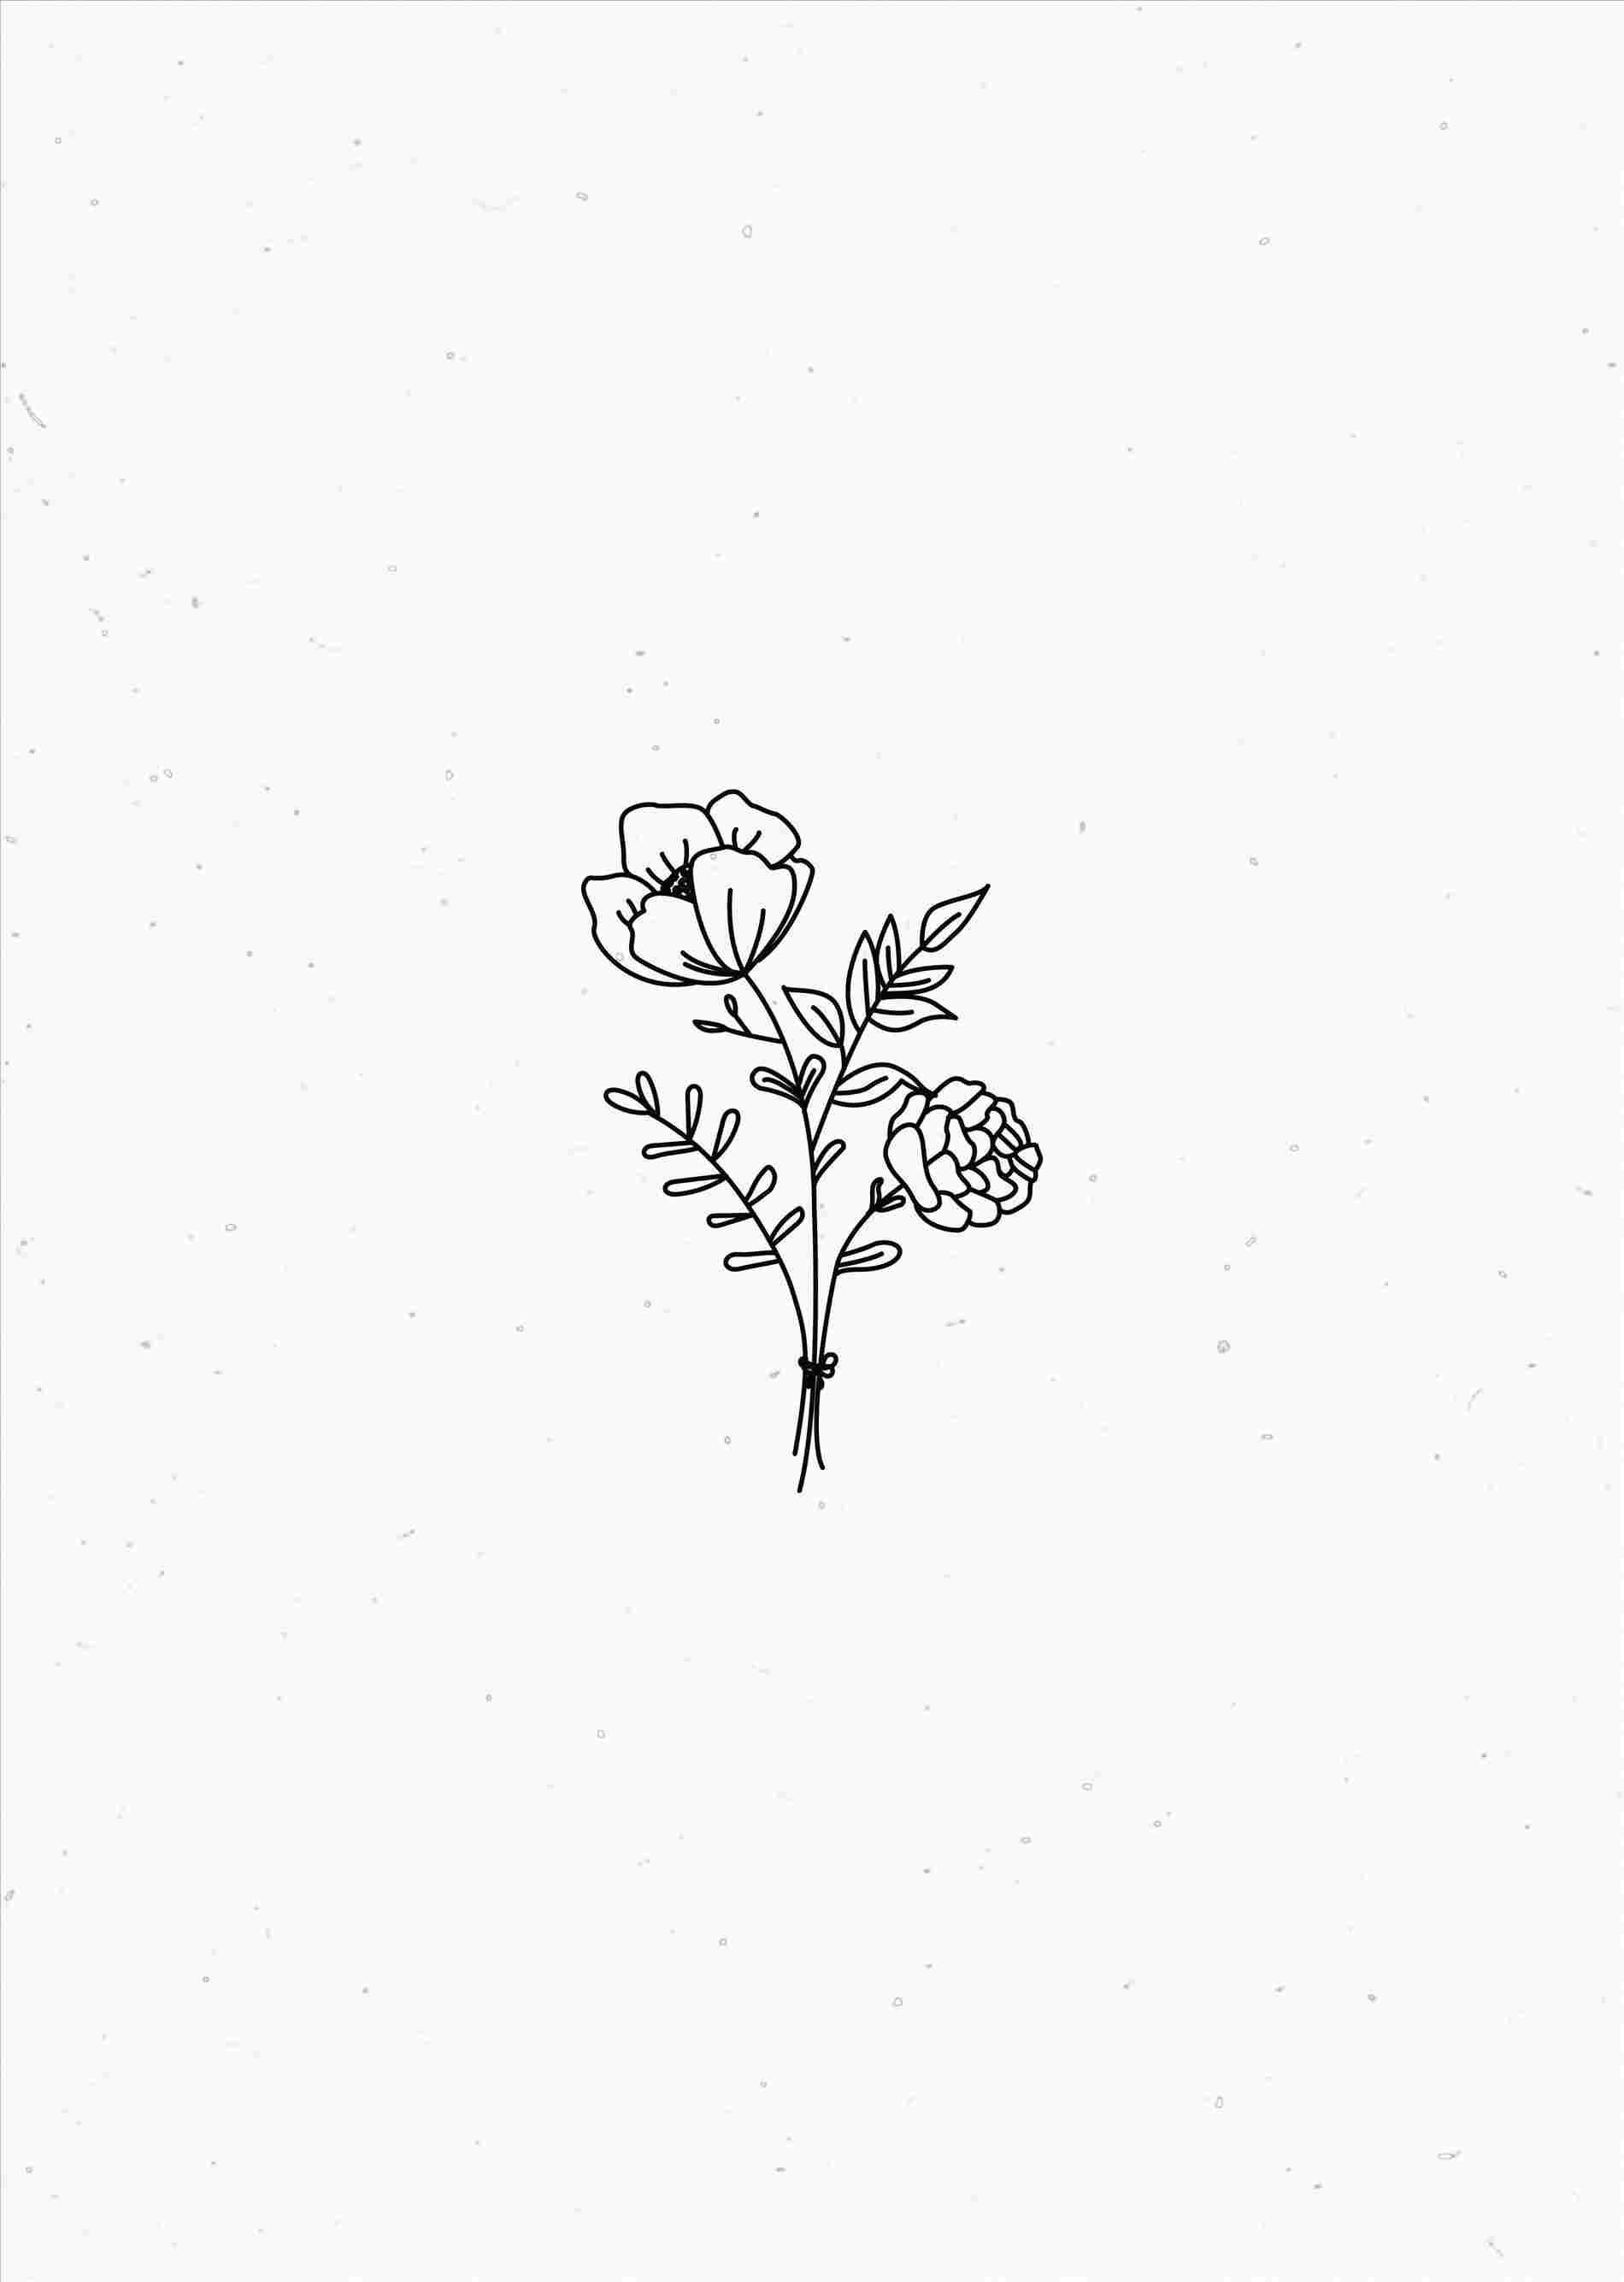 Free download gorl rhcom wallpaper Flower Aesthetic